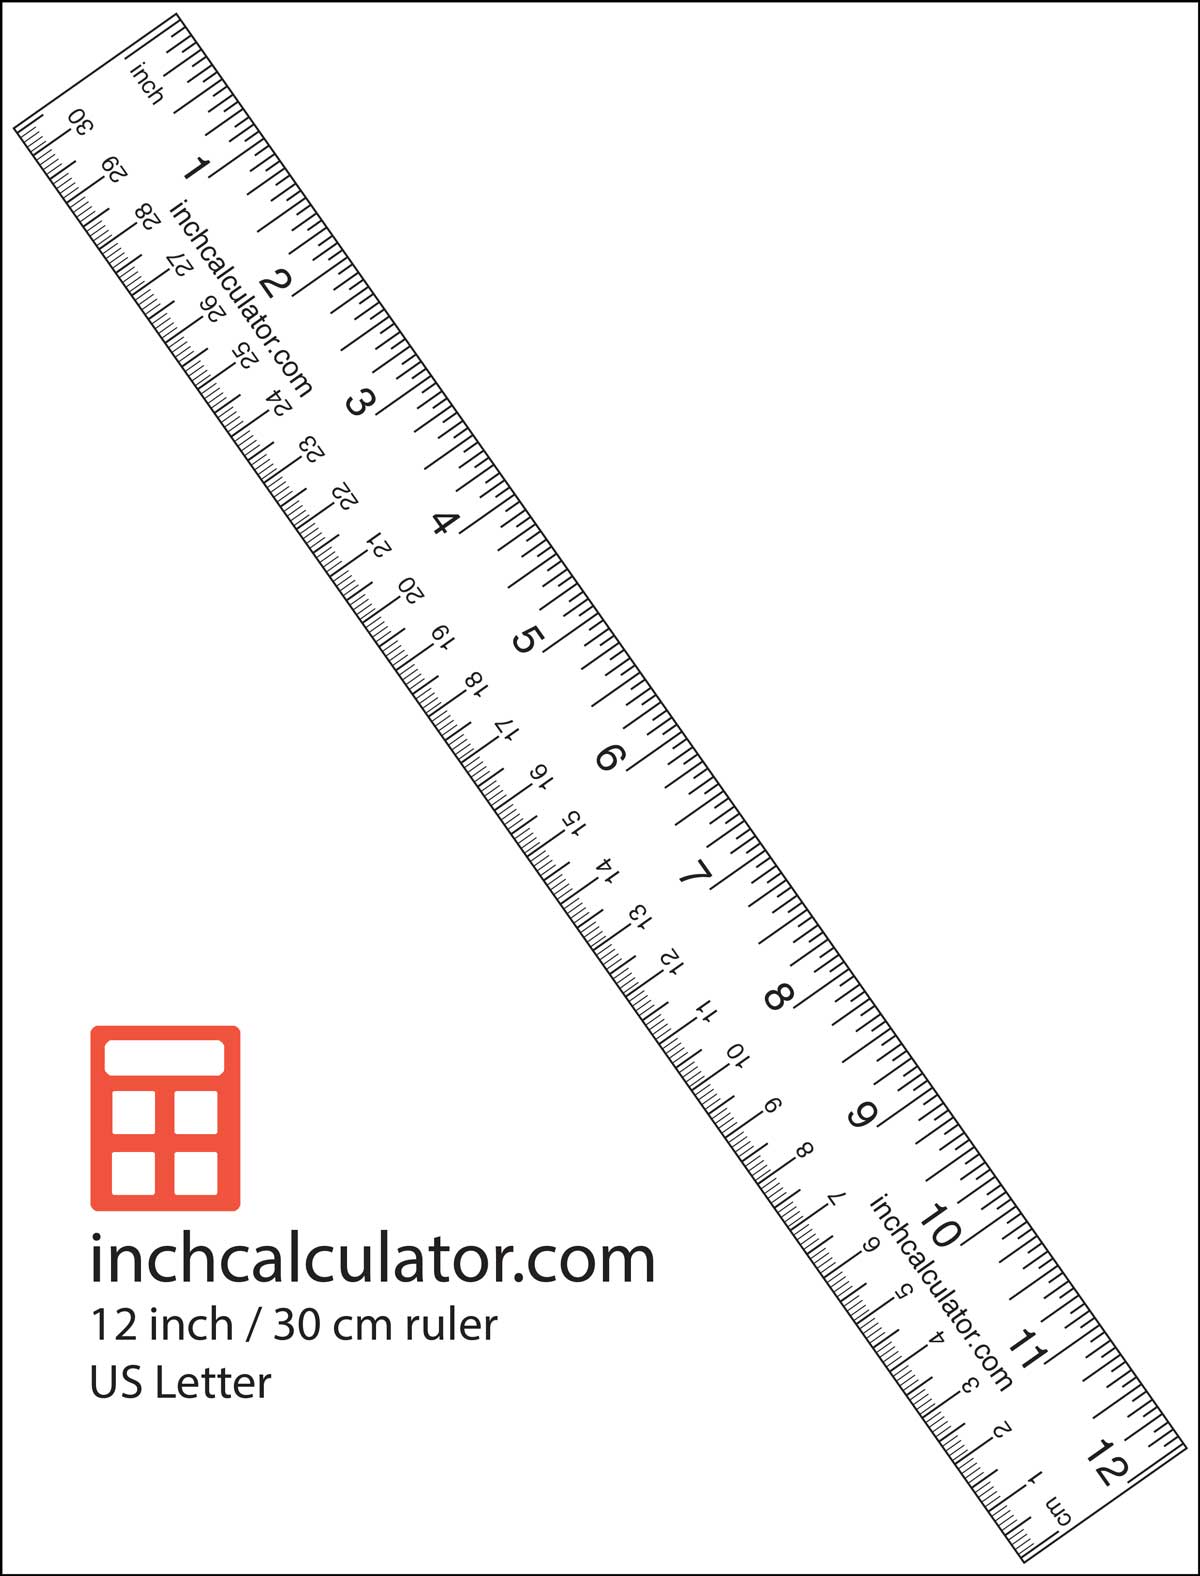 Printable Ruler PDF for Students and Teachers Tim's Printables